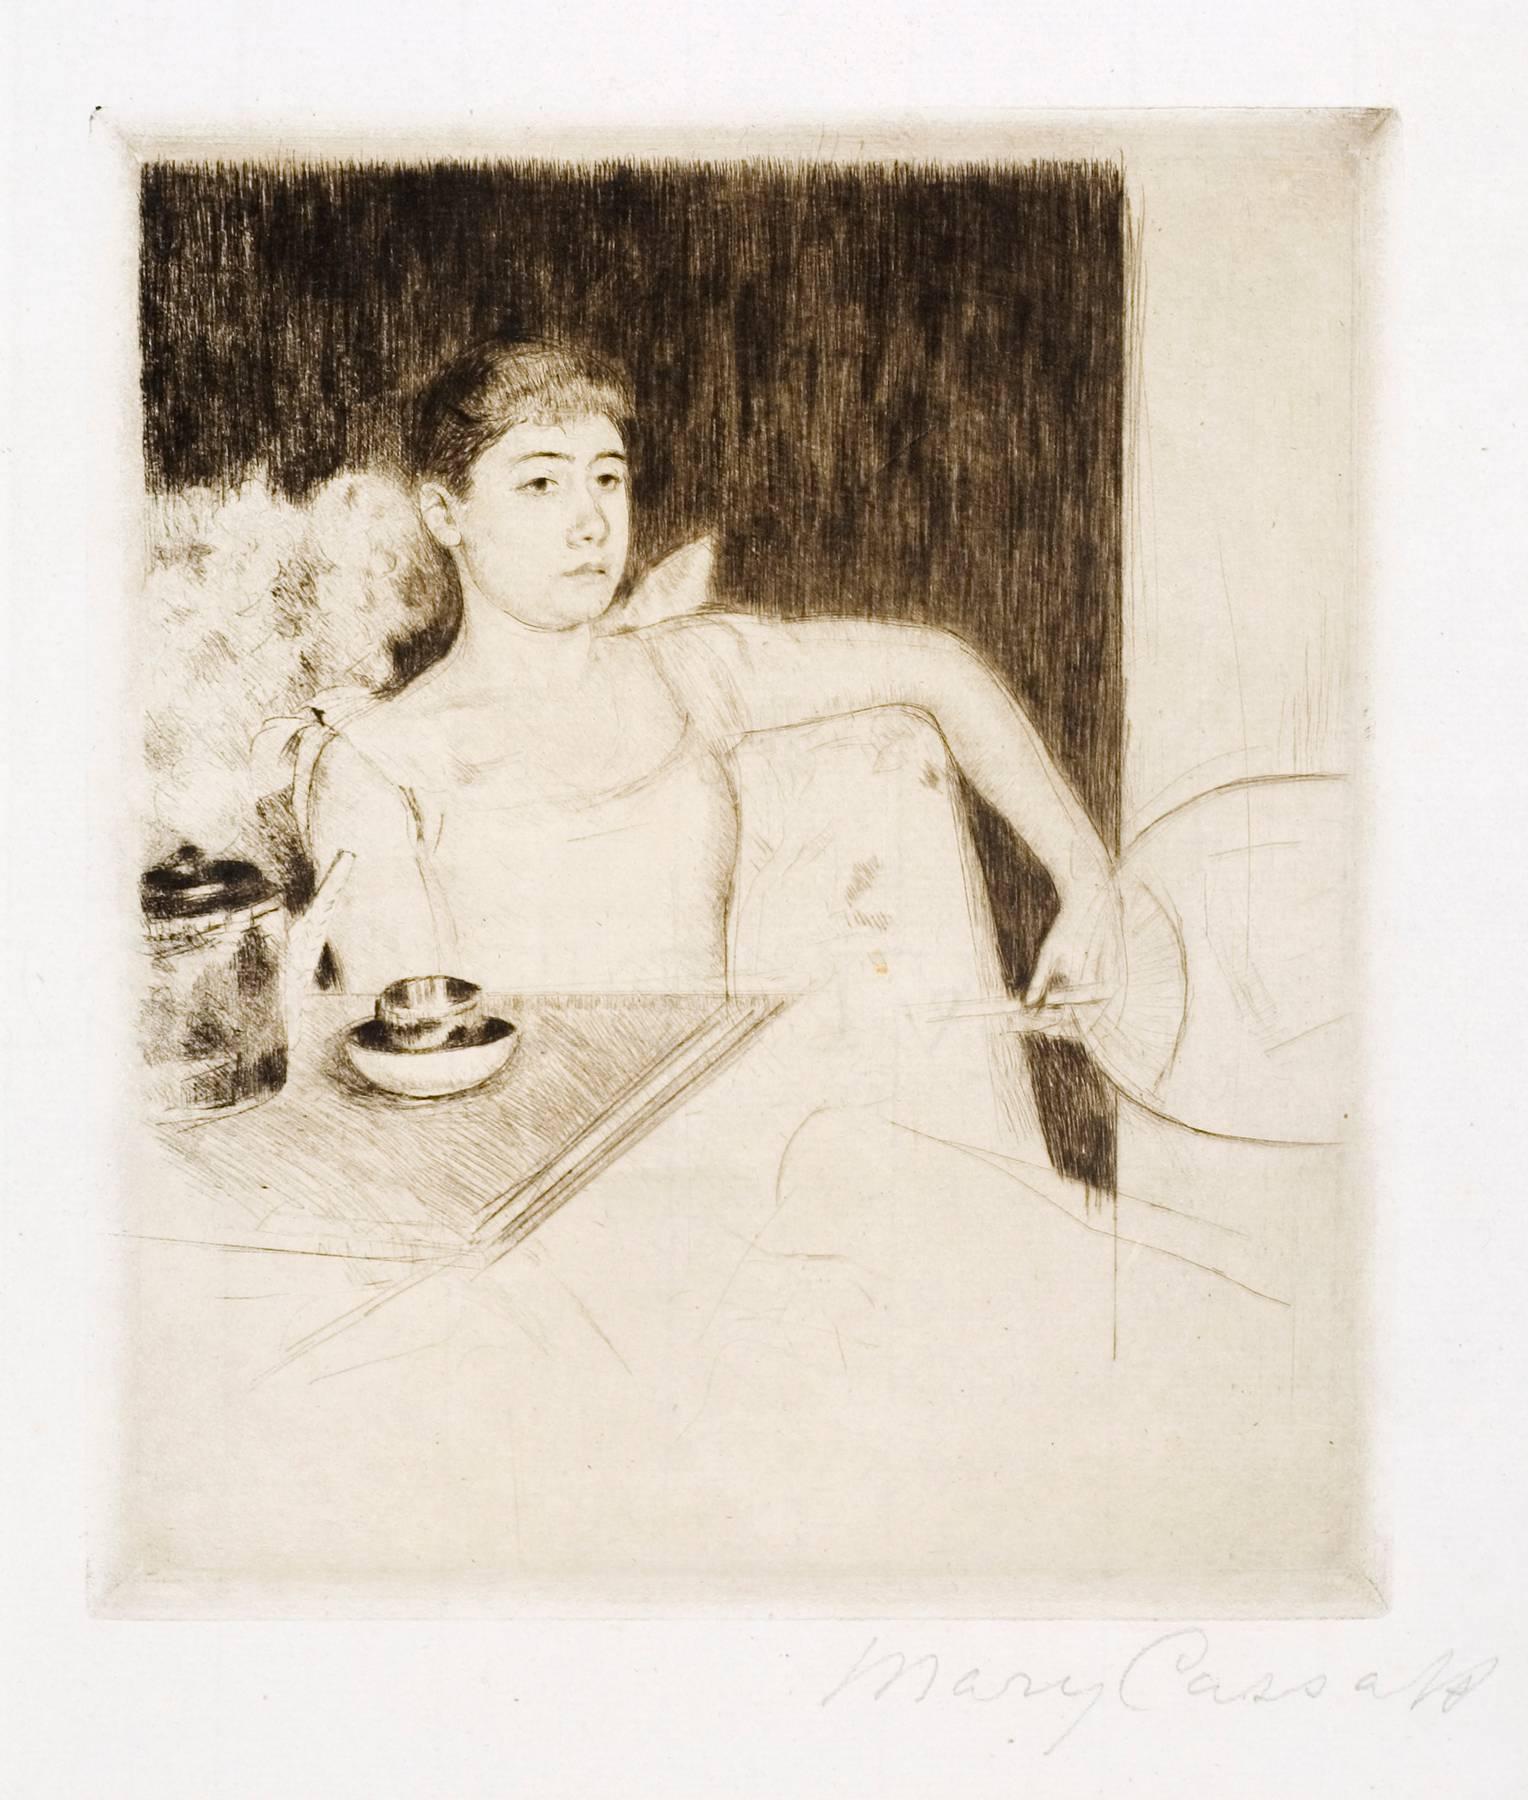 What was Mary Cassatt's art style?